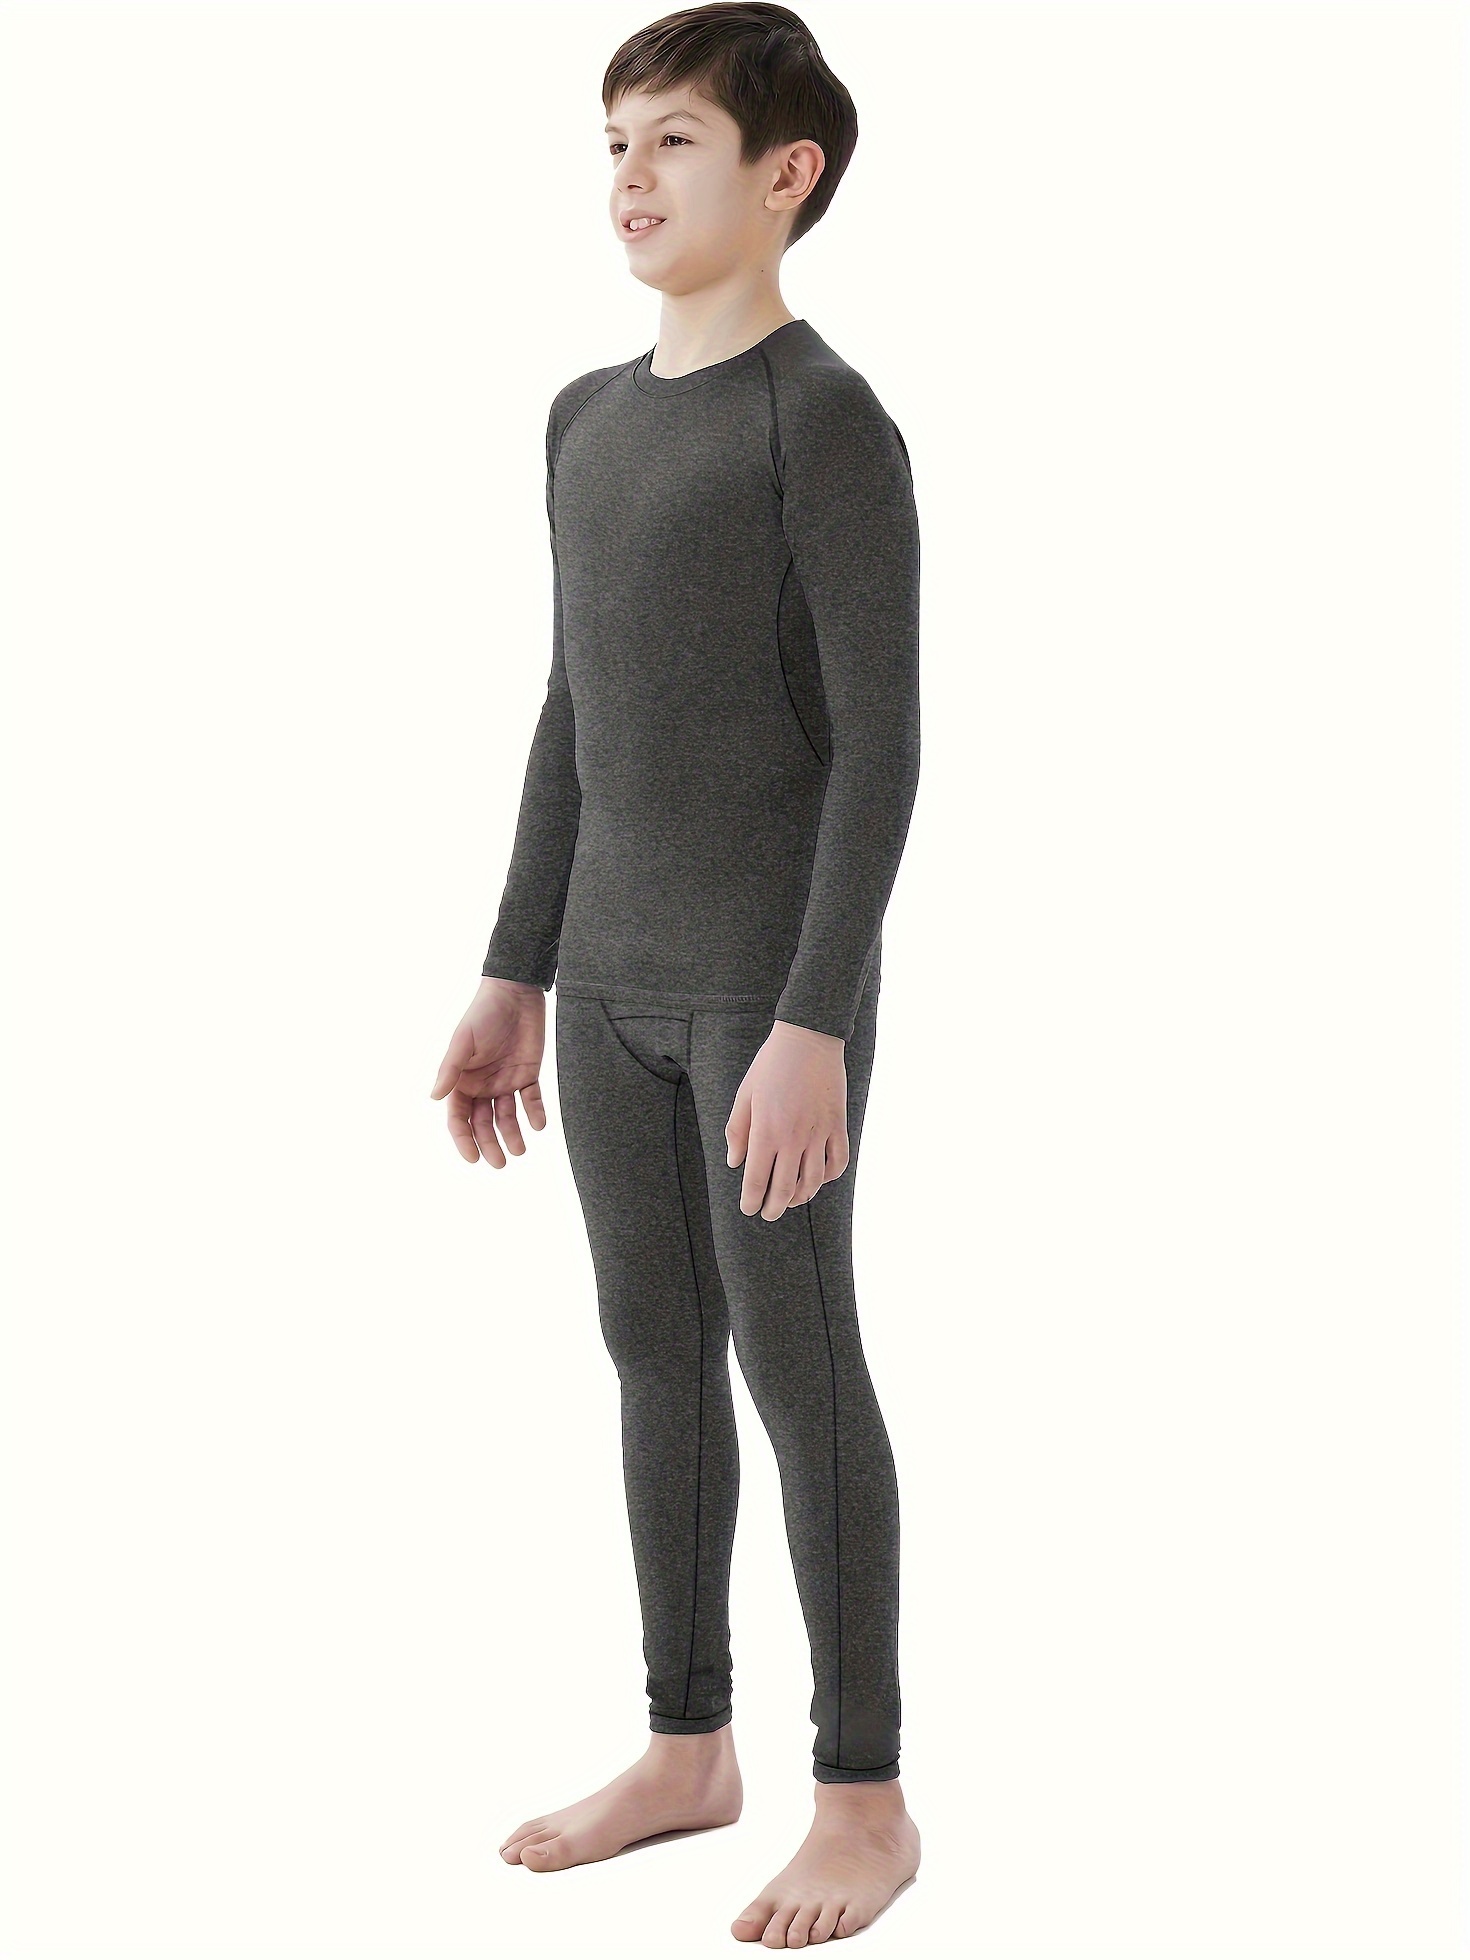  Youth Boys Thermal Underwear Set Fleece Lined